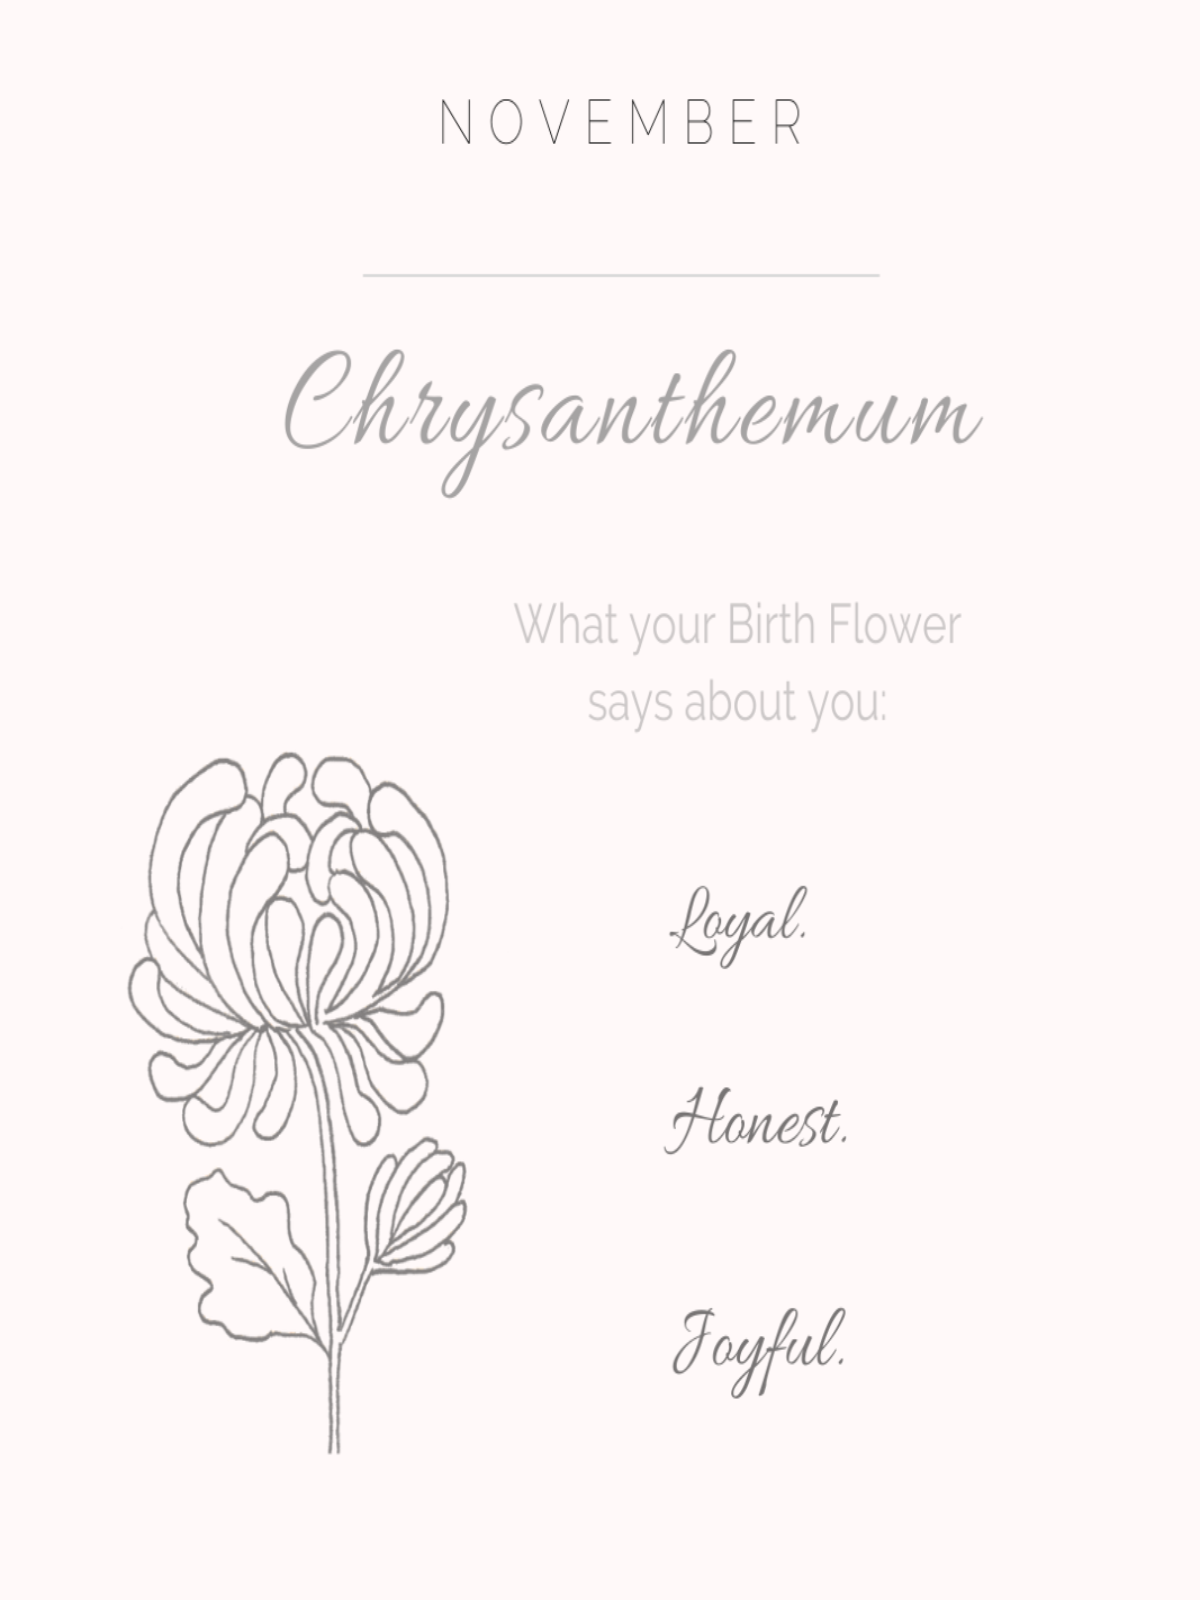 Chrysanthemum - November Birth Flower